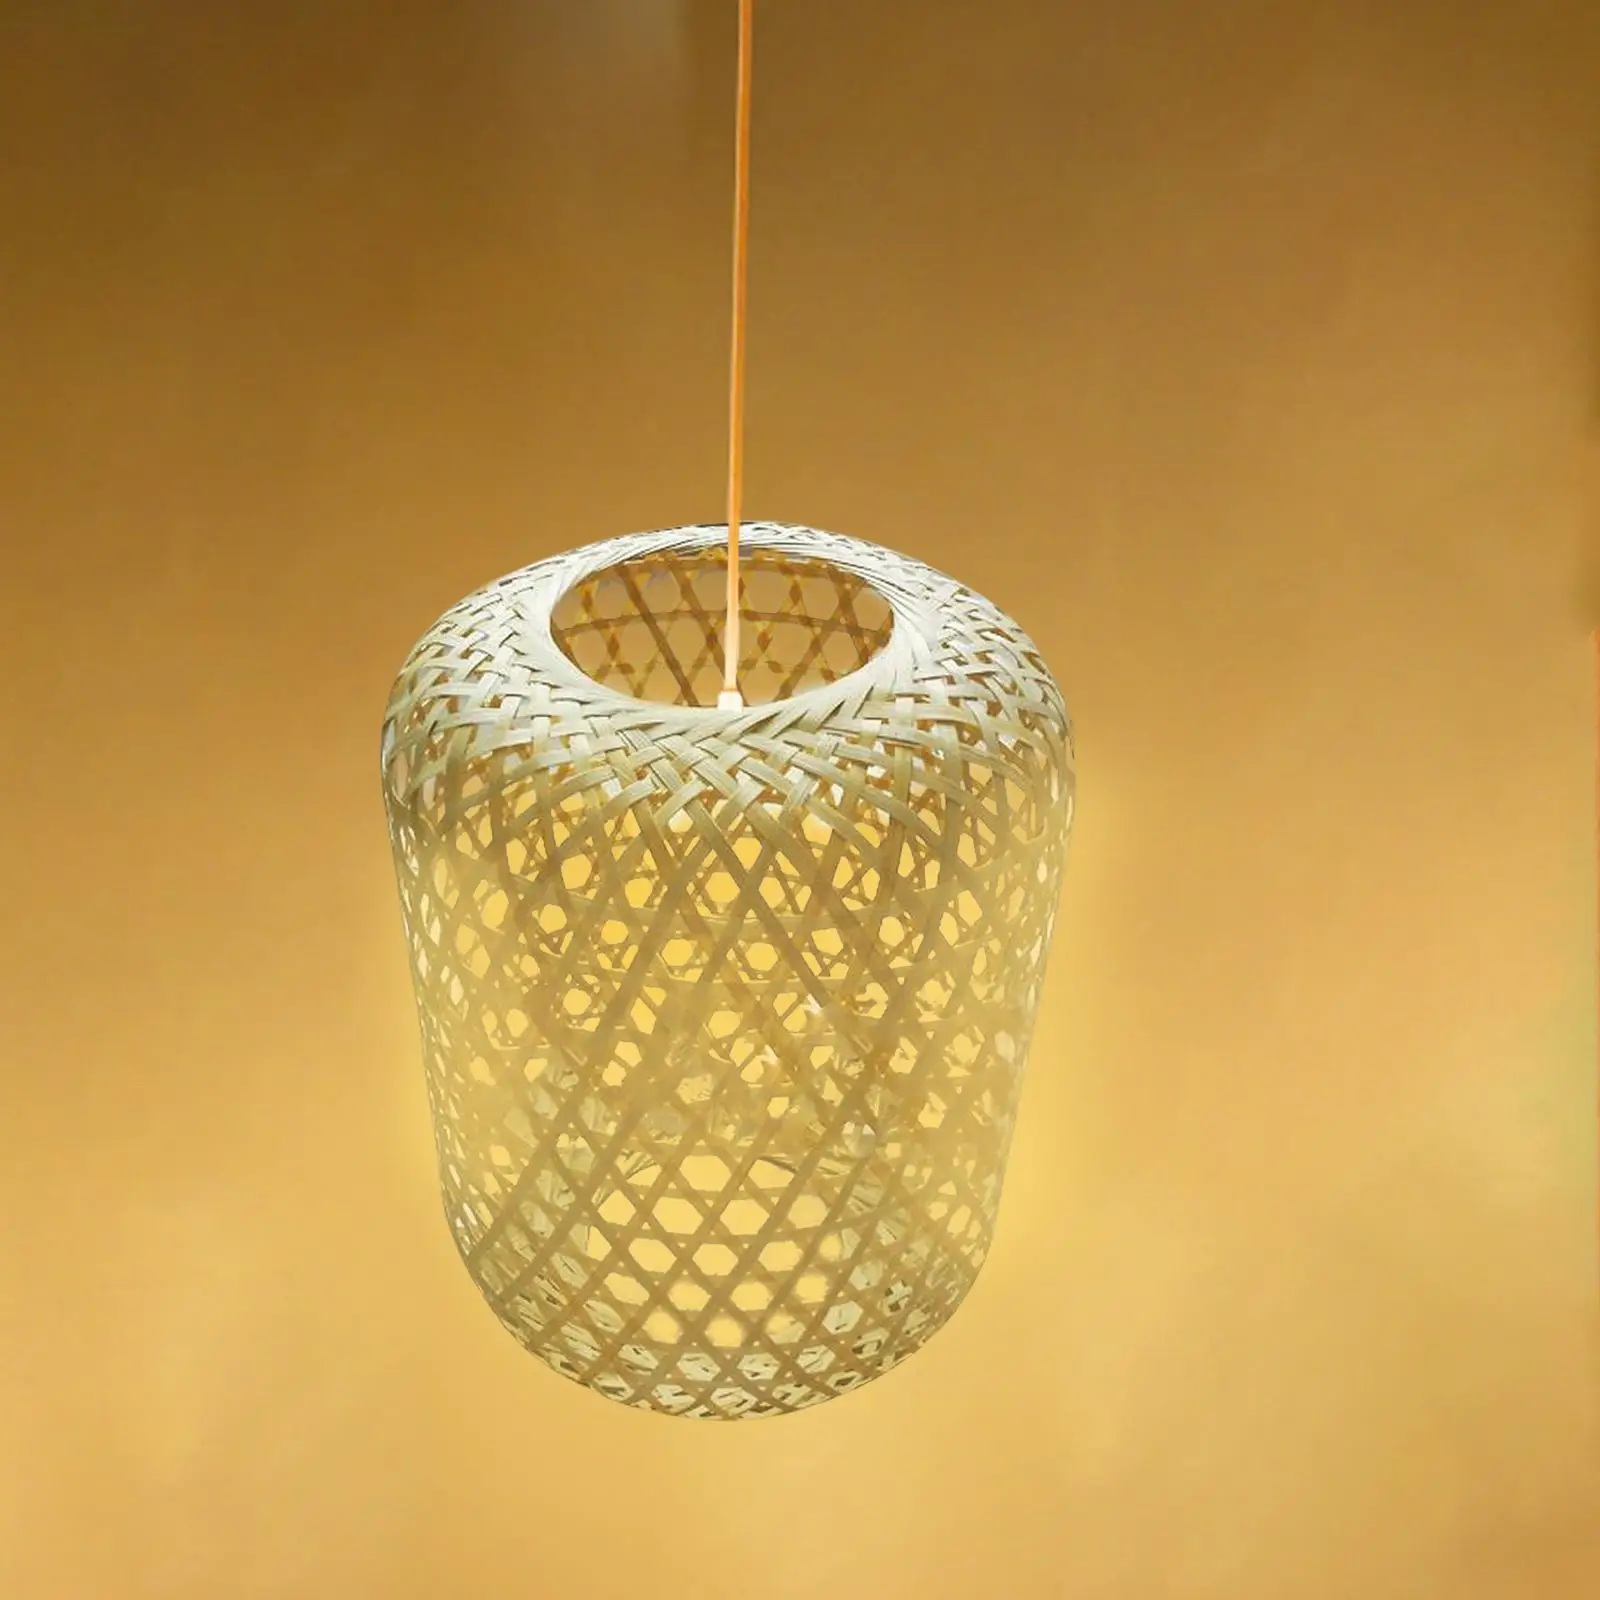 Classic Handwoven Bamboo Lamp Shade Ceiling Light Fixture Hanging Pendant Light